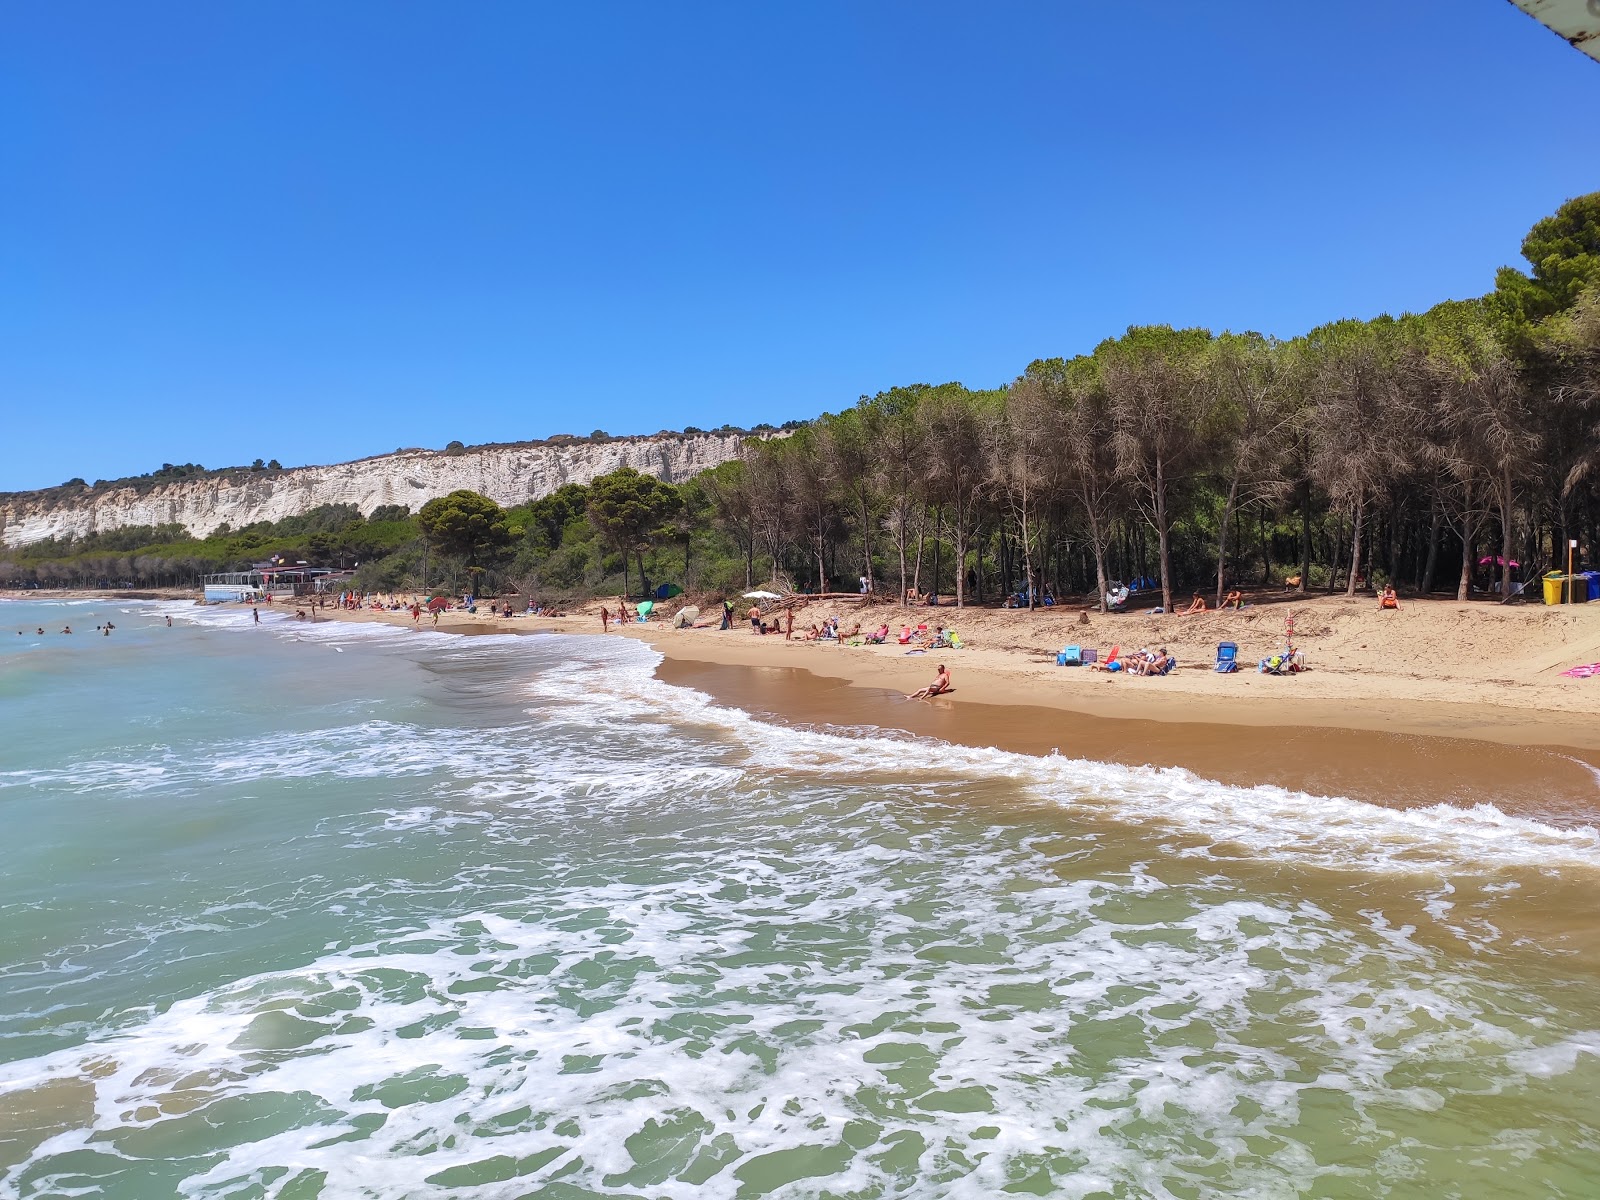 Foto av Spiaggia Di Eraclea Minoa med ljus sand yta